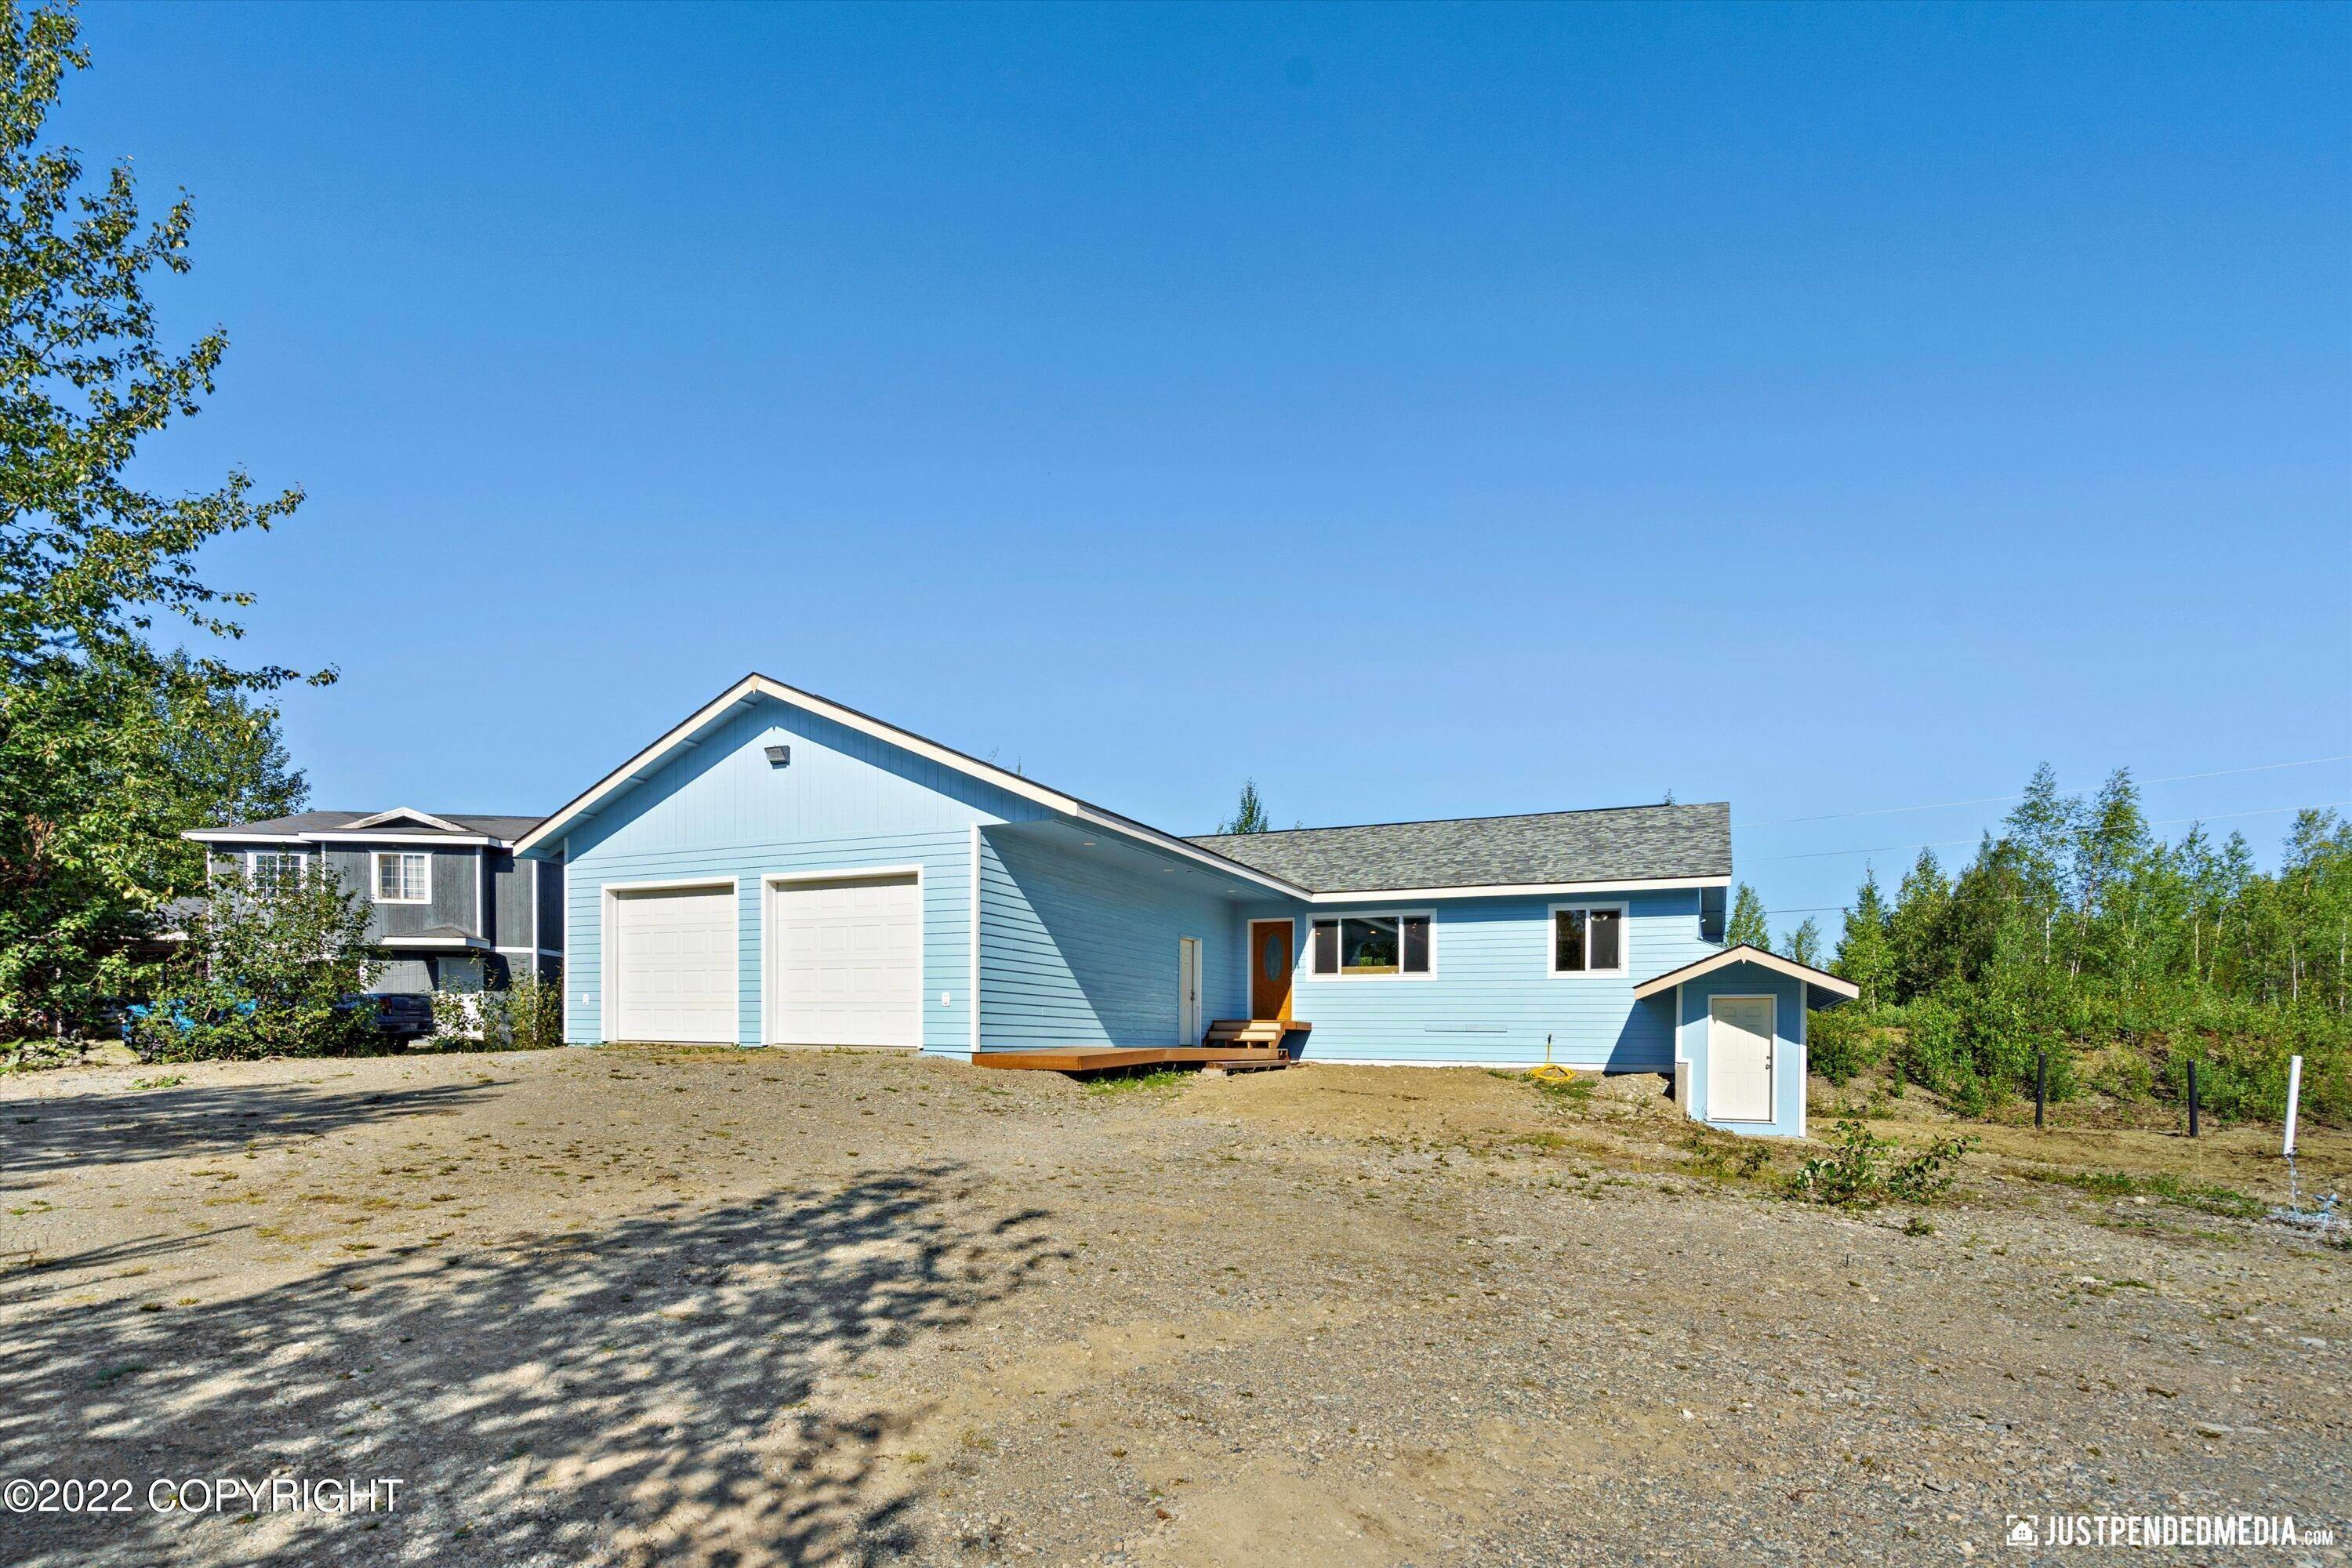 37. Single Family Homes for Sale at 772 S Beaver Lake Road Big Lake, Alaska 99654 United States